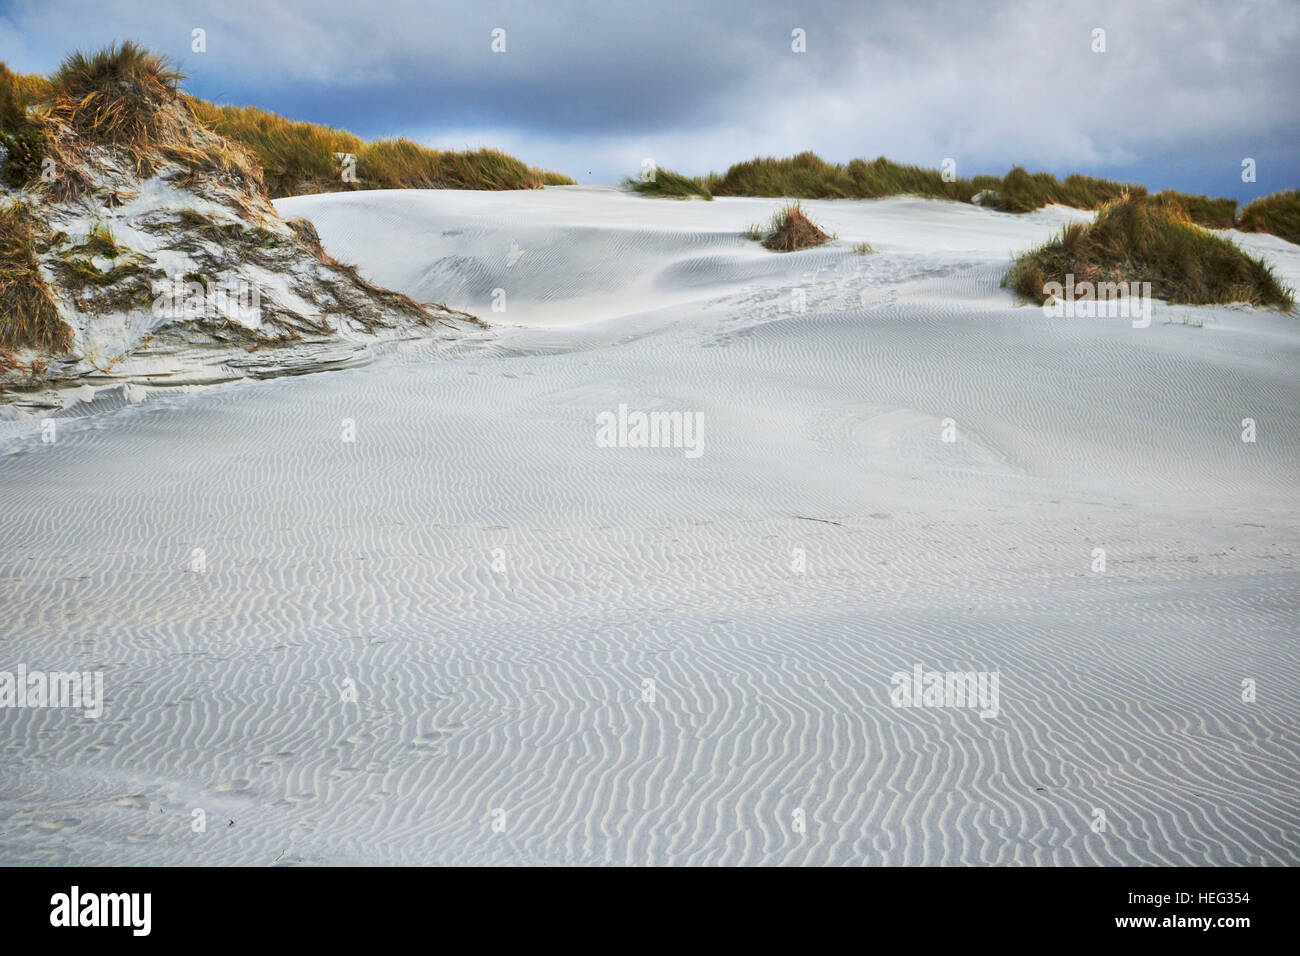 New Zealand, south island, Wharariki Beach, dune grass and Sand in soft light, Stock Photo